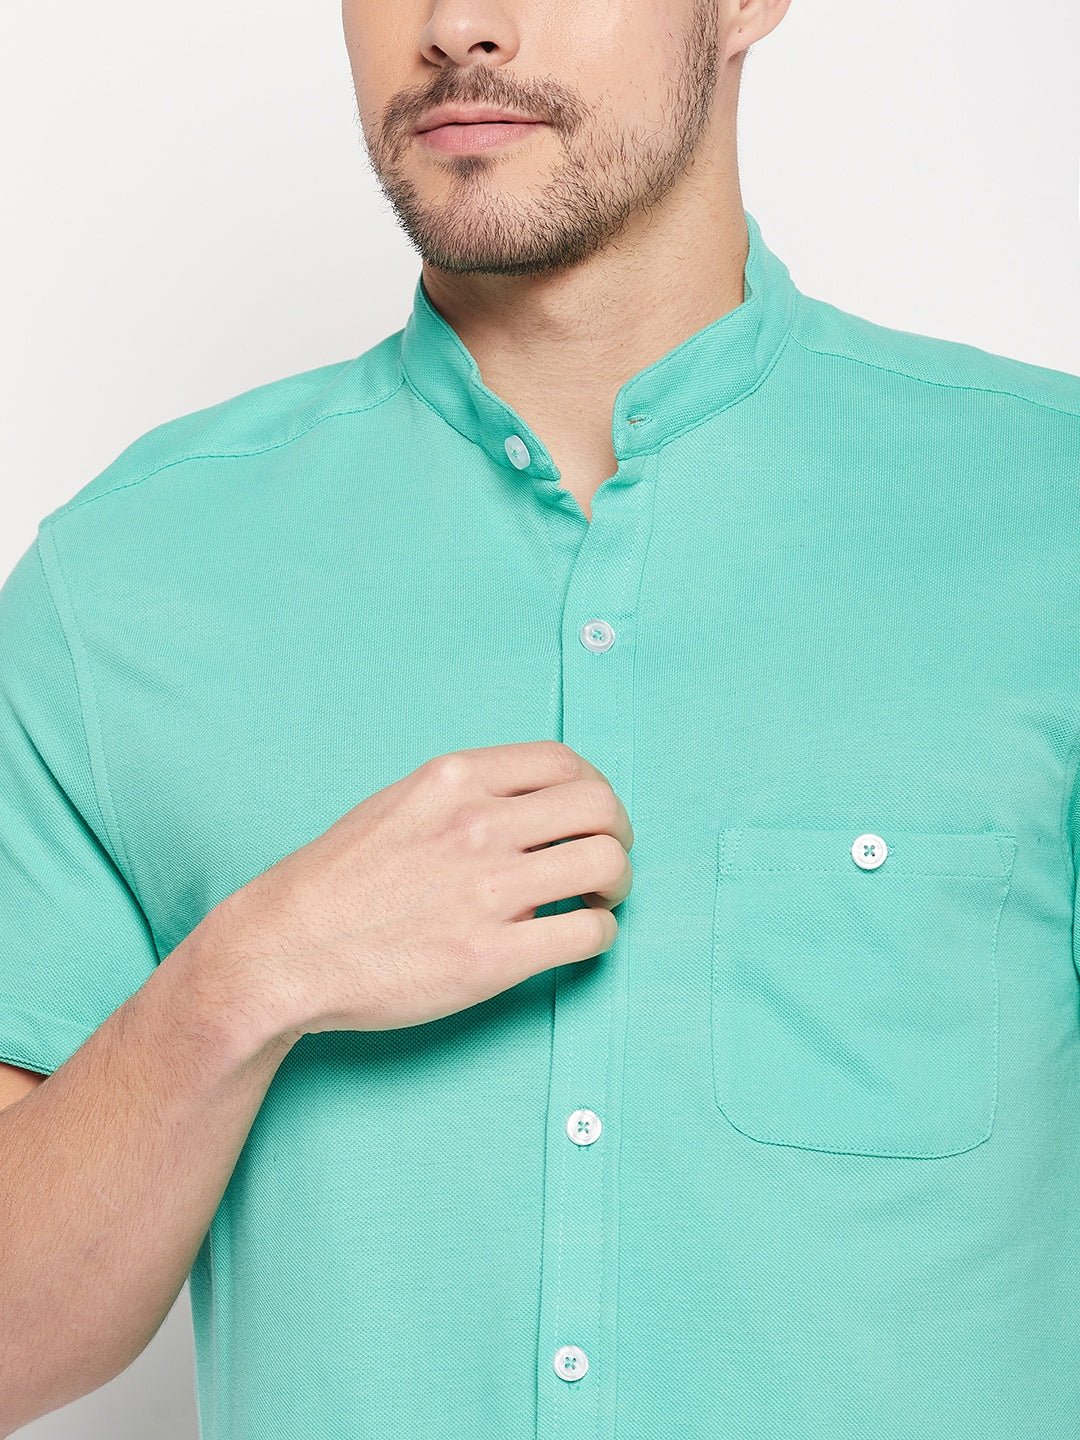 Green Knitted Shirt - clubyork